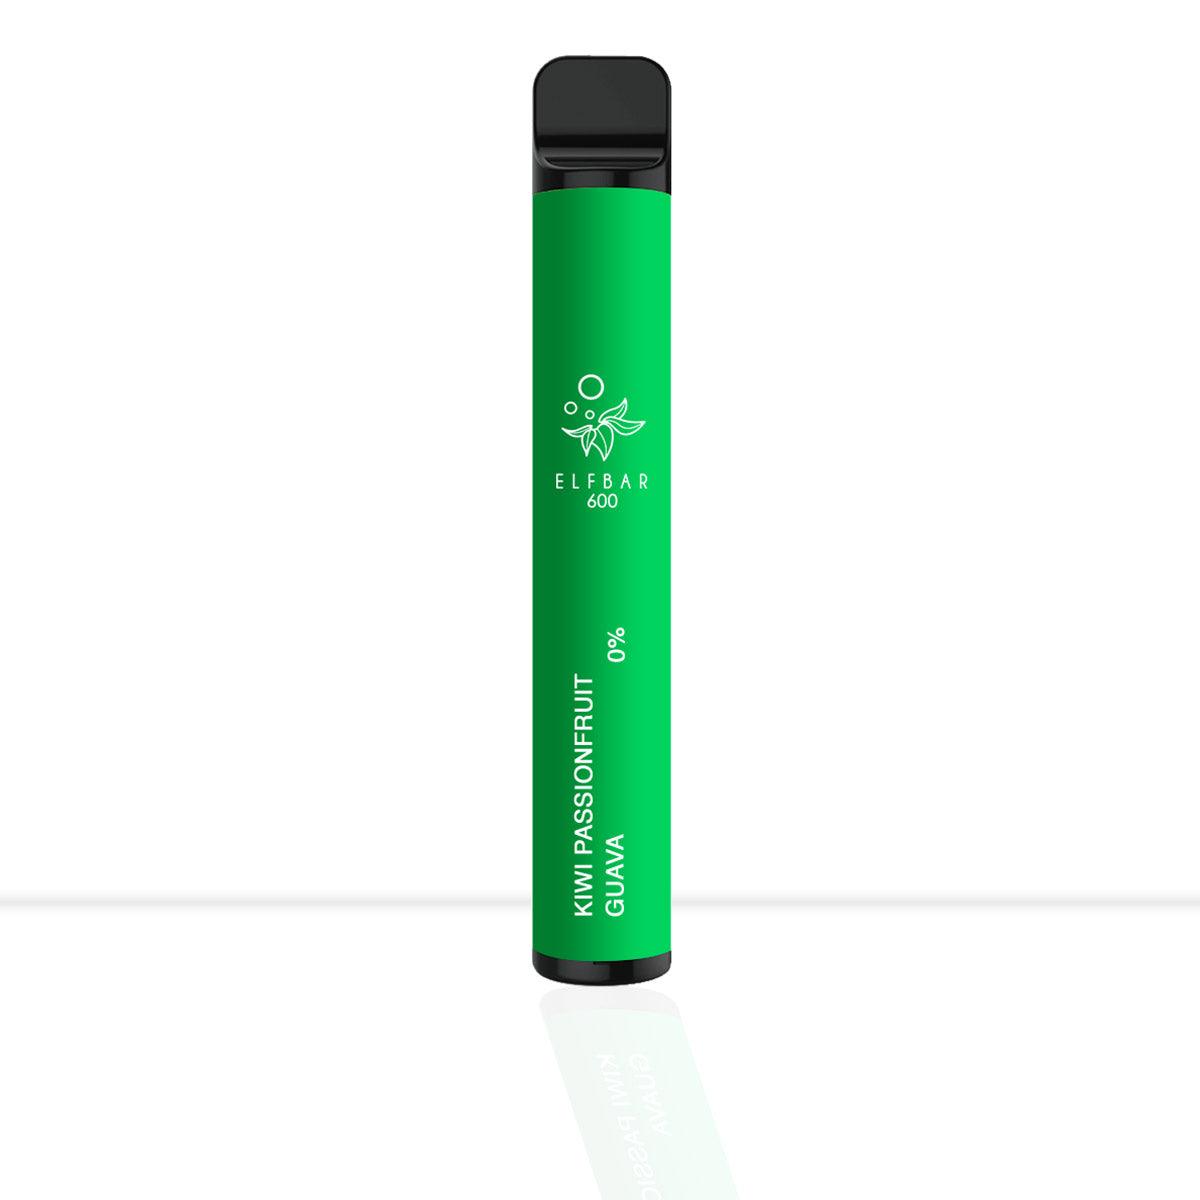 A green disposable vape device